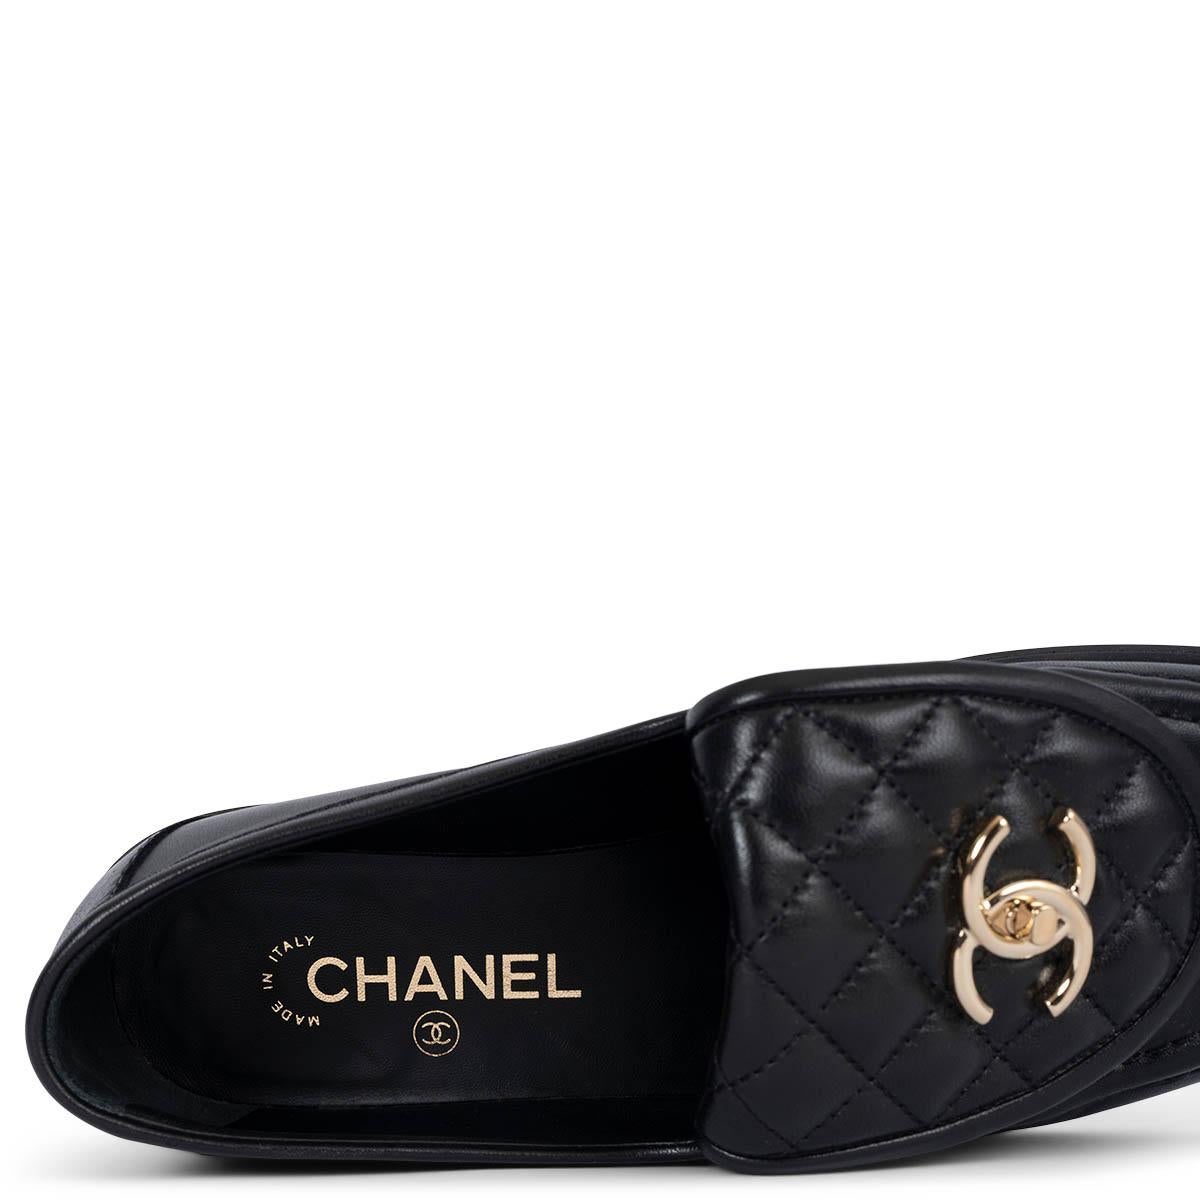 CHANEL cuir noir REV TURNLOCK Mocassins Chaussures 39 en vente 3